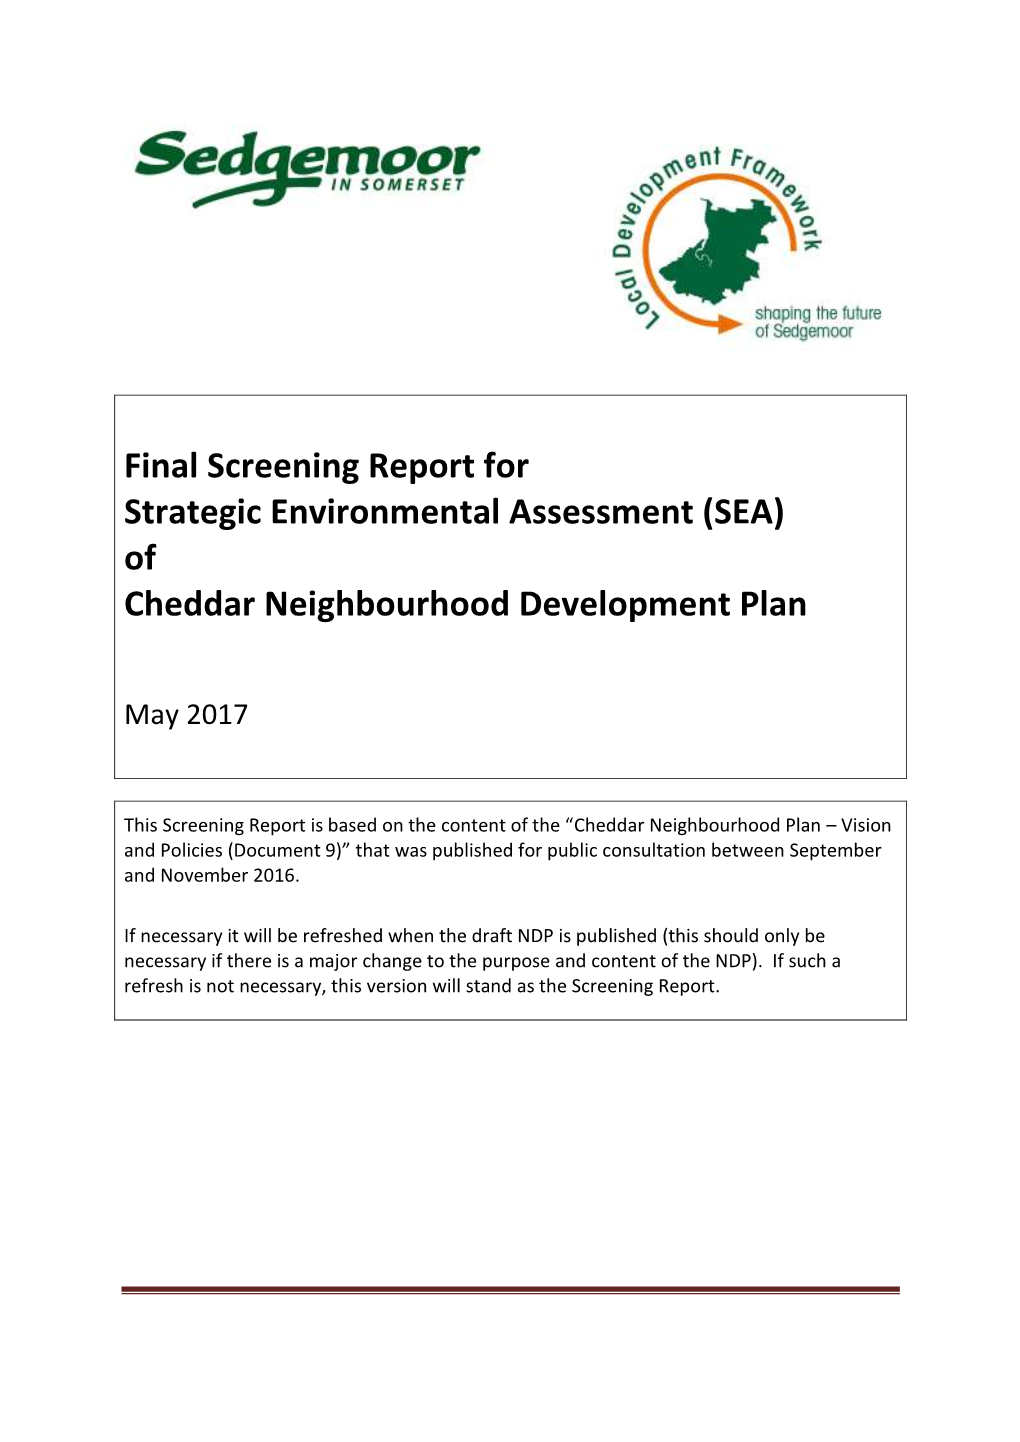 Final Screening Report for Strategic Environmental Assessment (SEA) of Cheddar Neighbourhood Development Plan